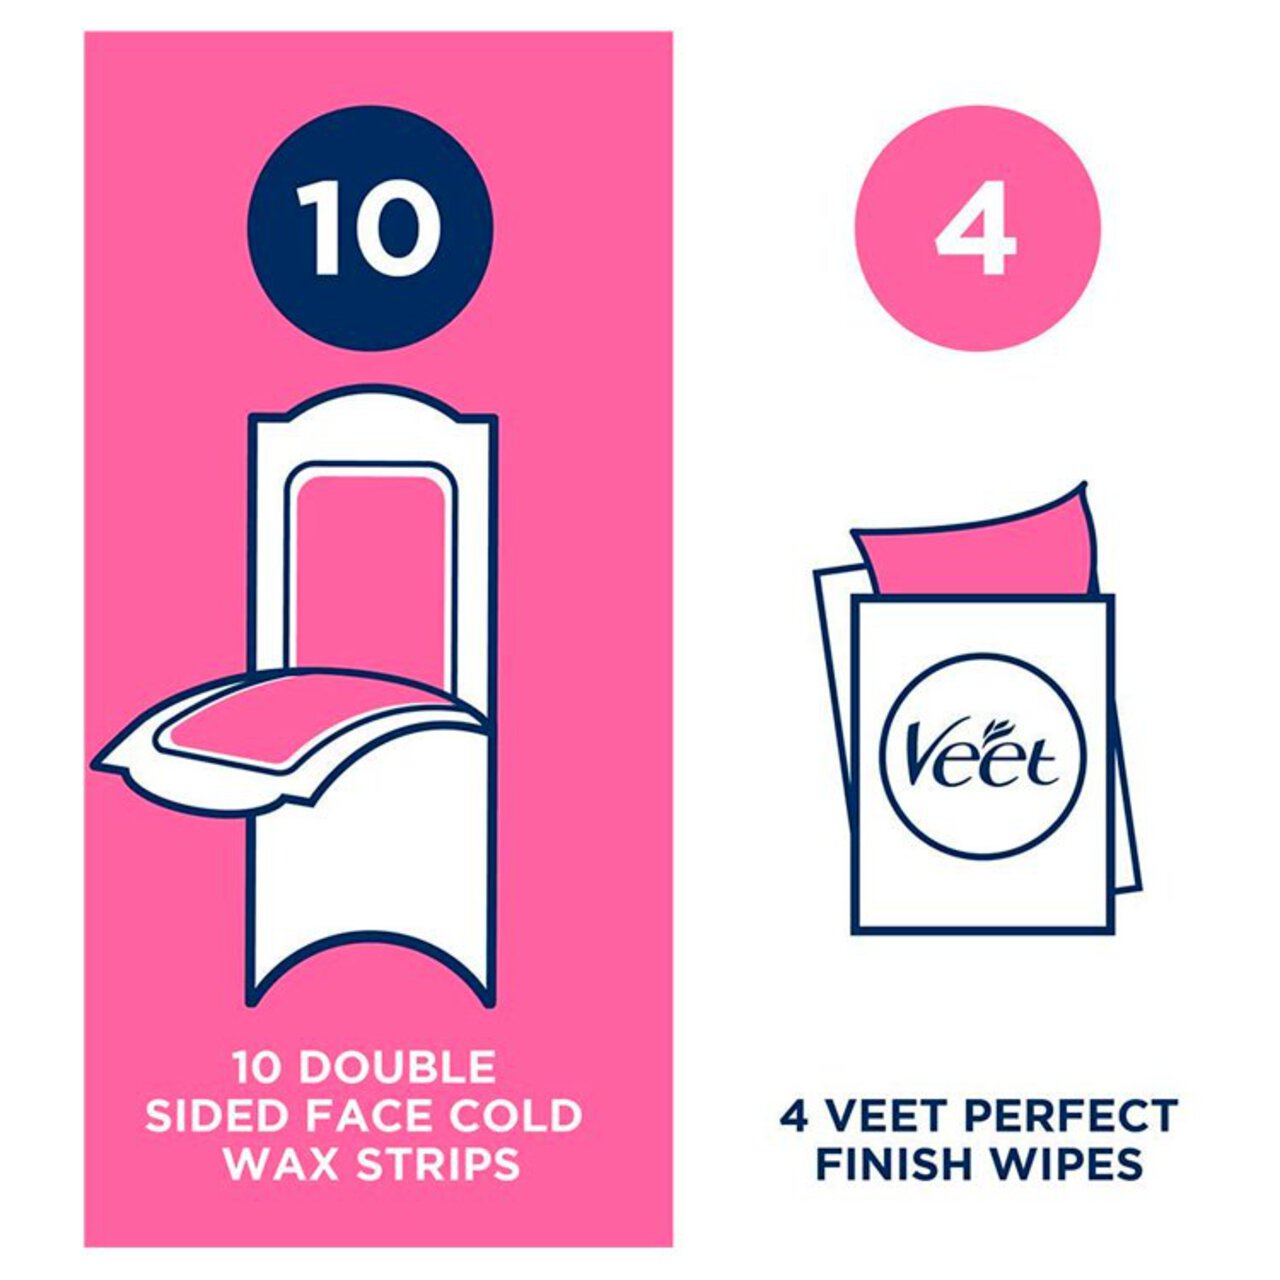 Veet Wax Strips Face for Sensitive Skin 20 per pack